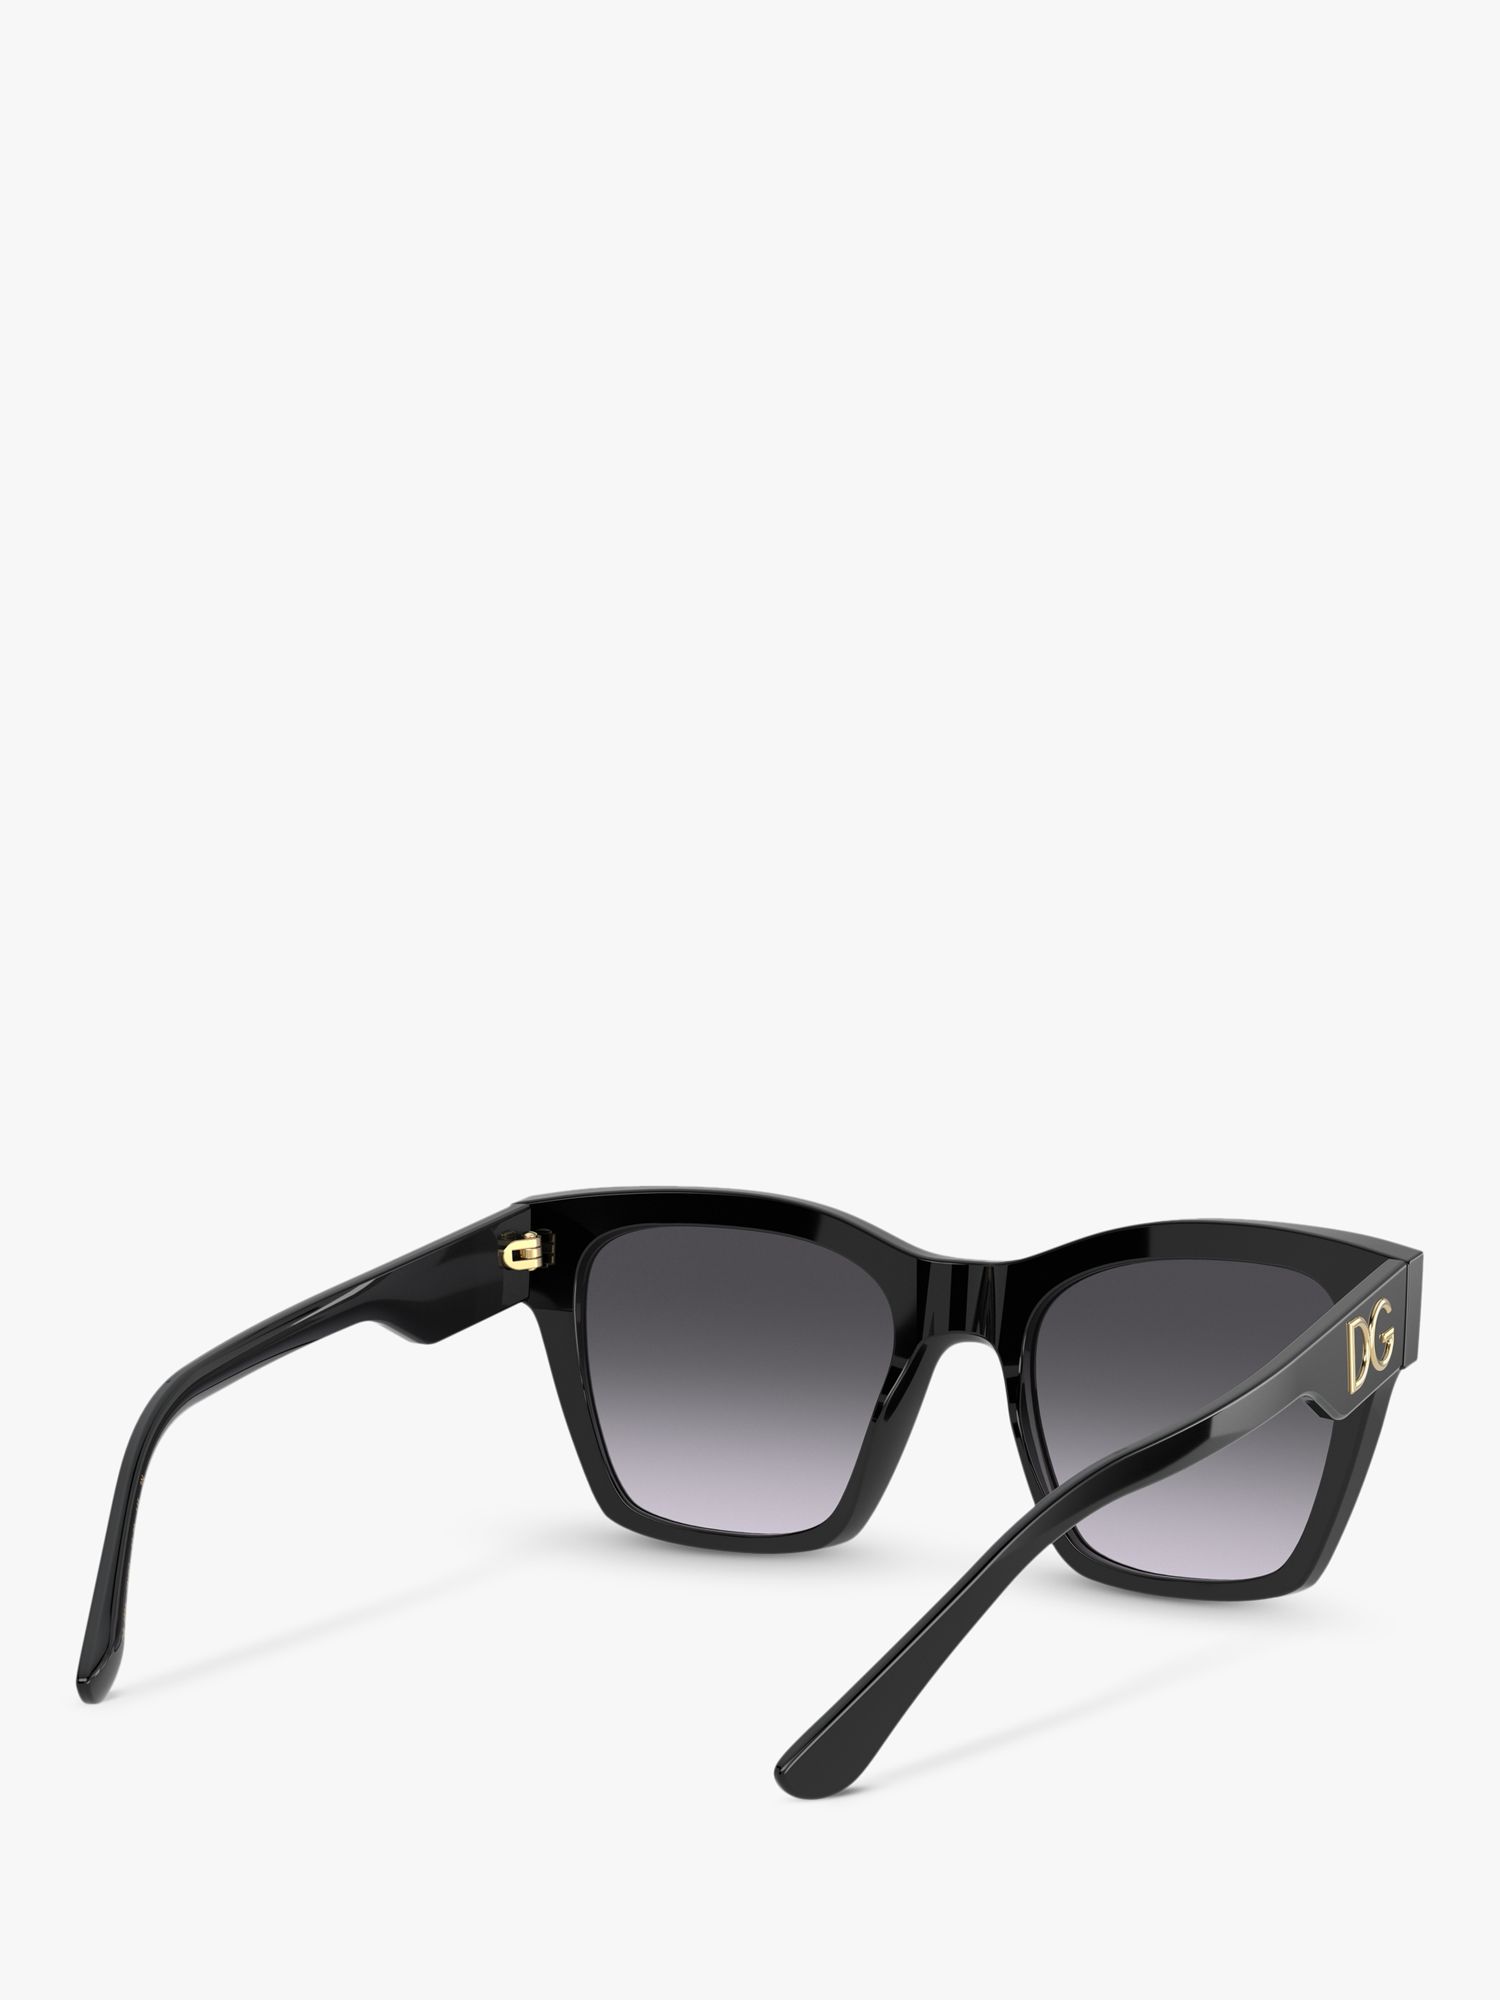 Buy Dolce & Gabbana DG4384 Women's Square Sunglasses Online at johnlewis.com